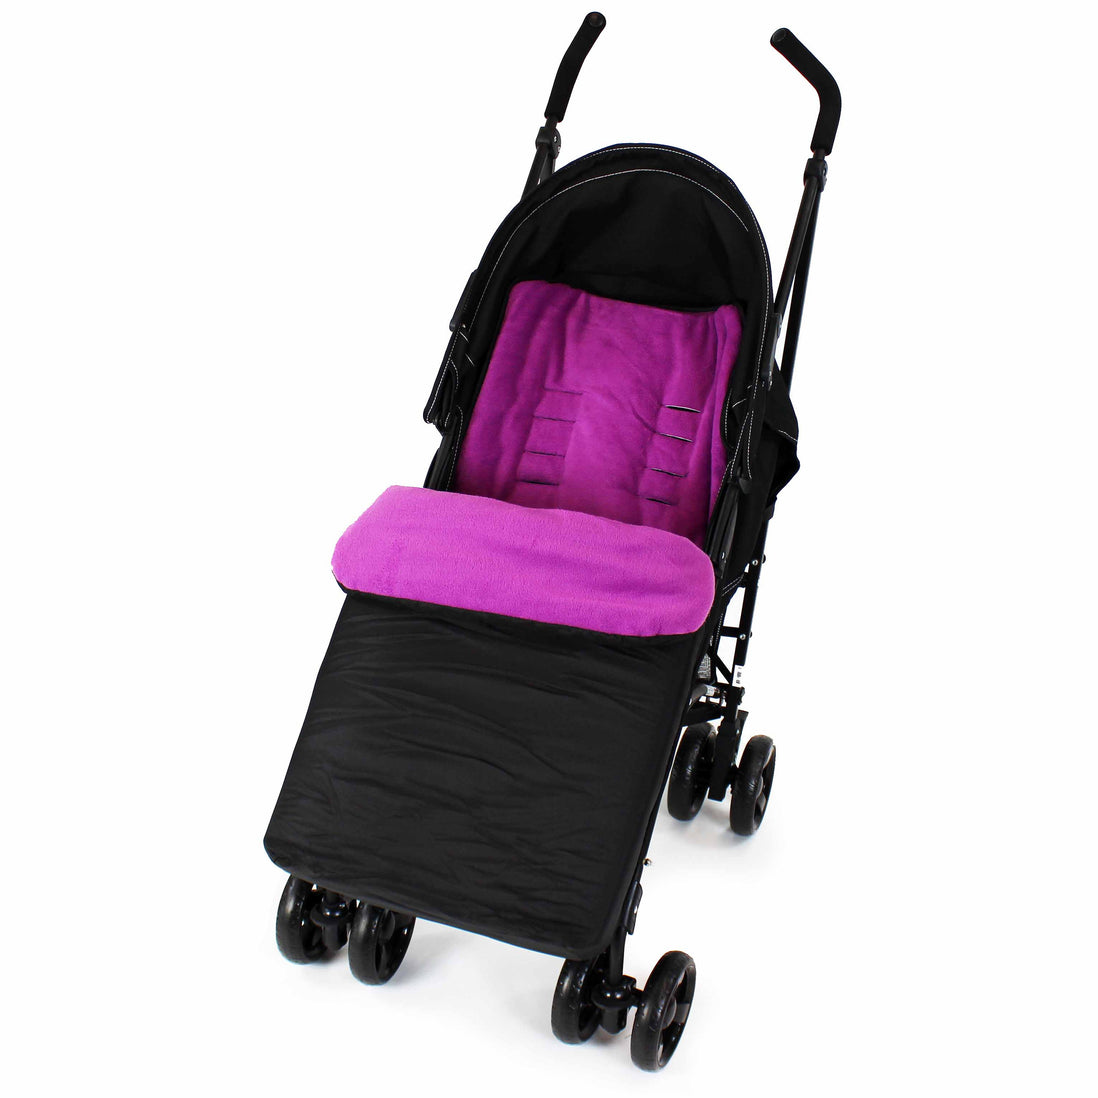 obaby double stroller purple